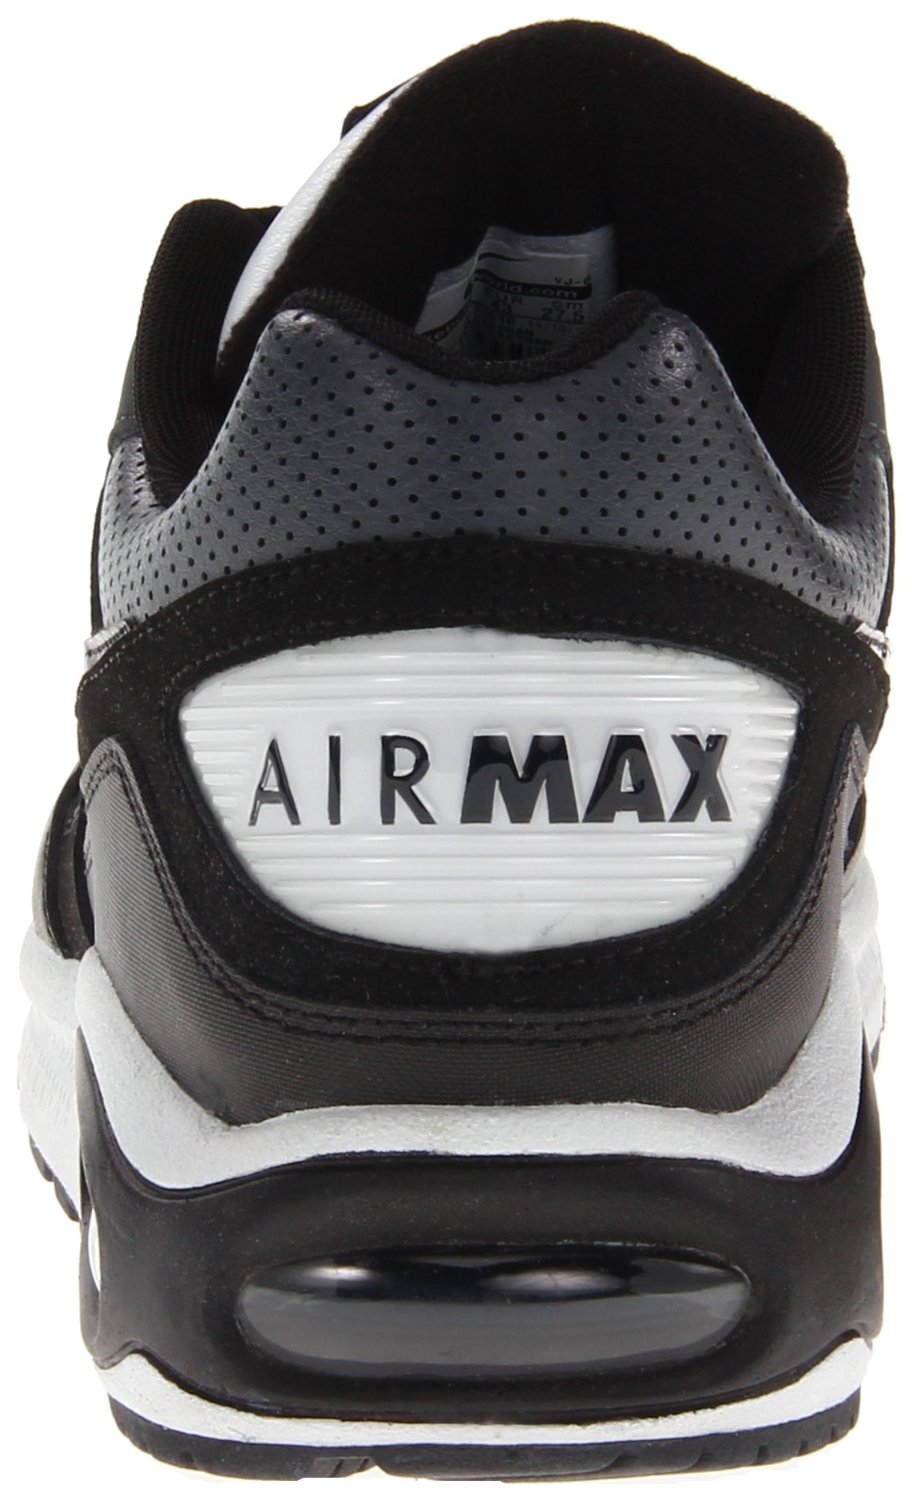 Air Max shoes | Niceblog 75s